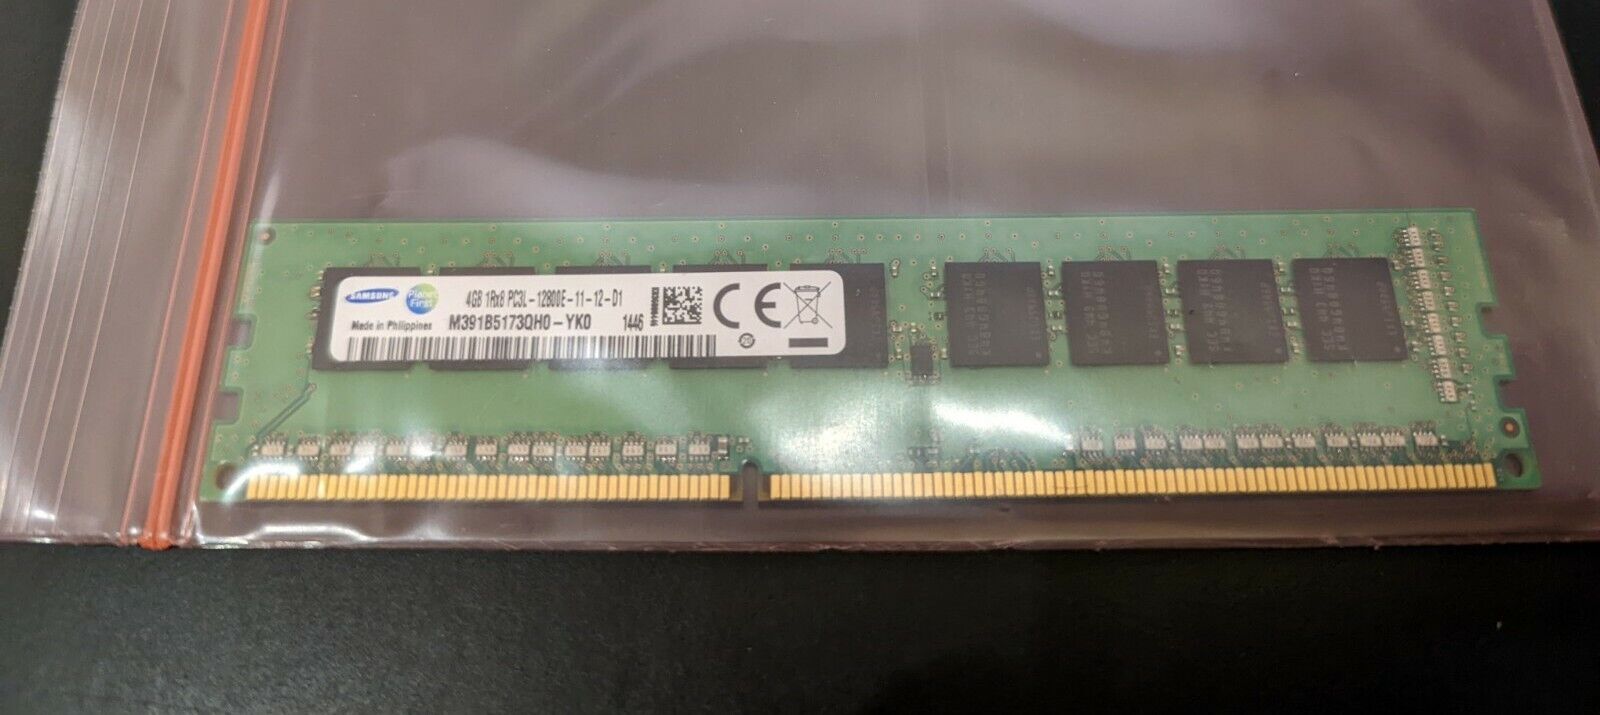 Samsung 4GB RAM (1x4GB) PC3L-12800E DDR3-1600 SERVER RAM SDRAM M391B5173QH0-YK0